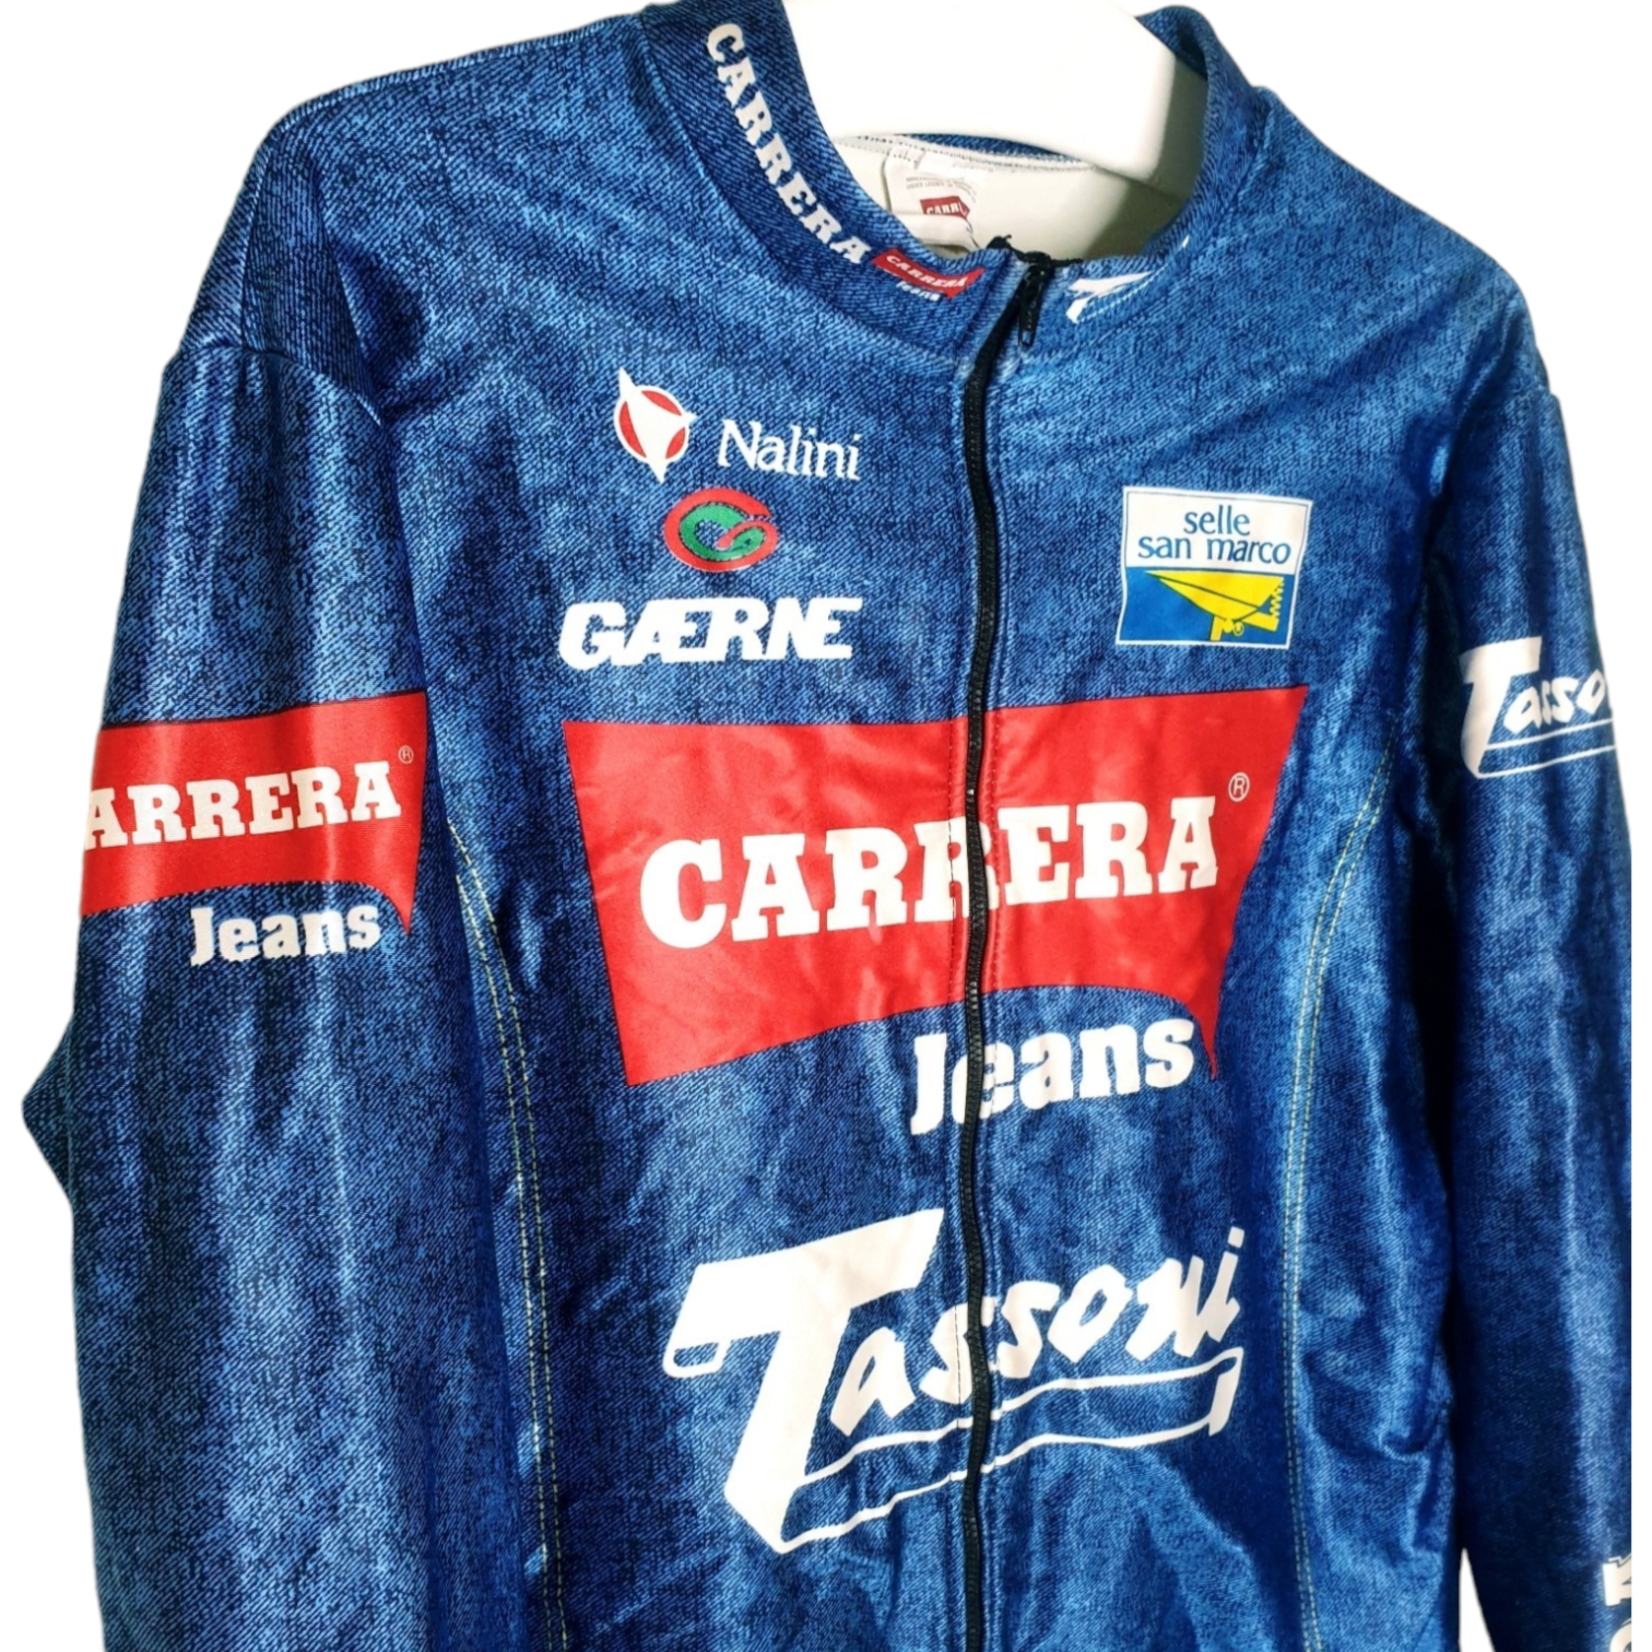 Nalini Original Nalini Vintage Radtrikot Carrera Jeans - Tassoni 1993